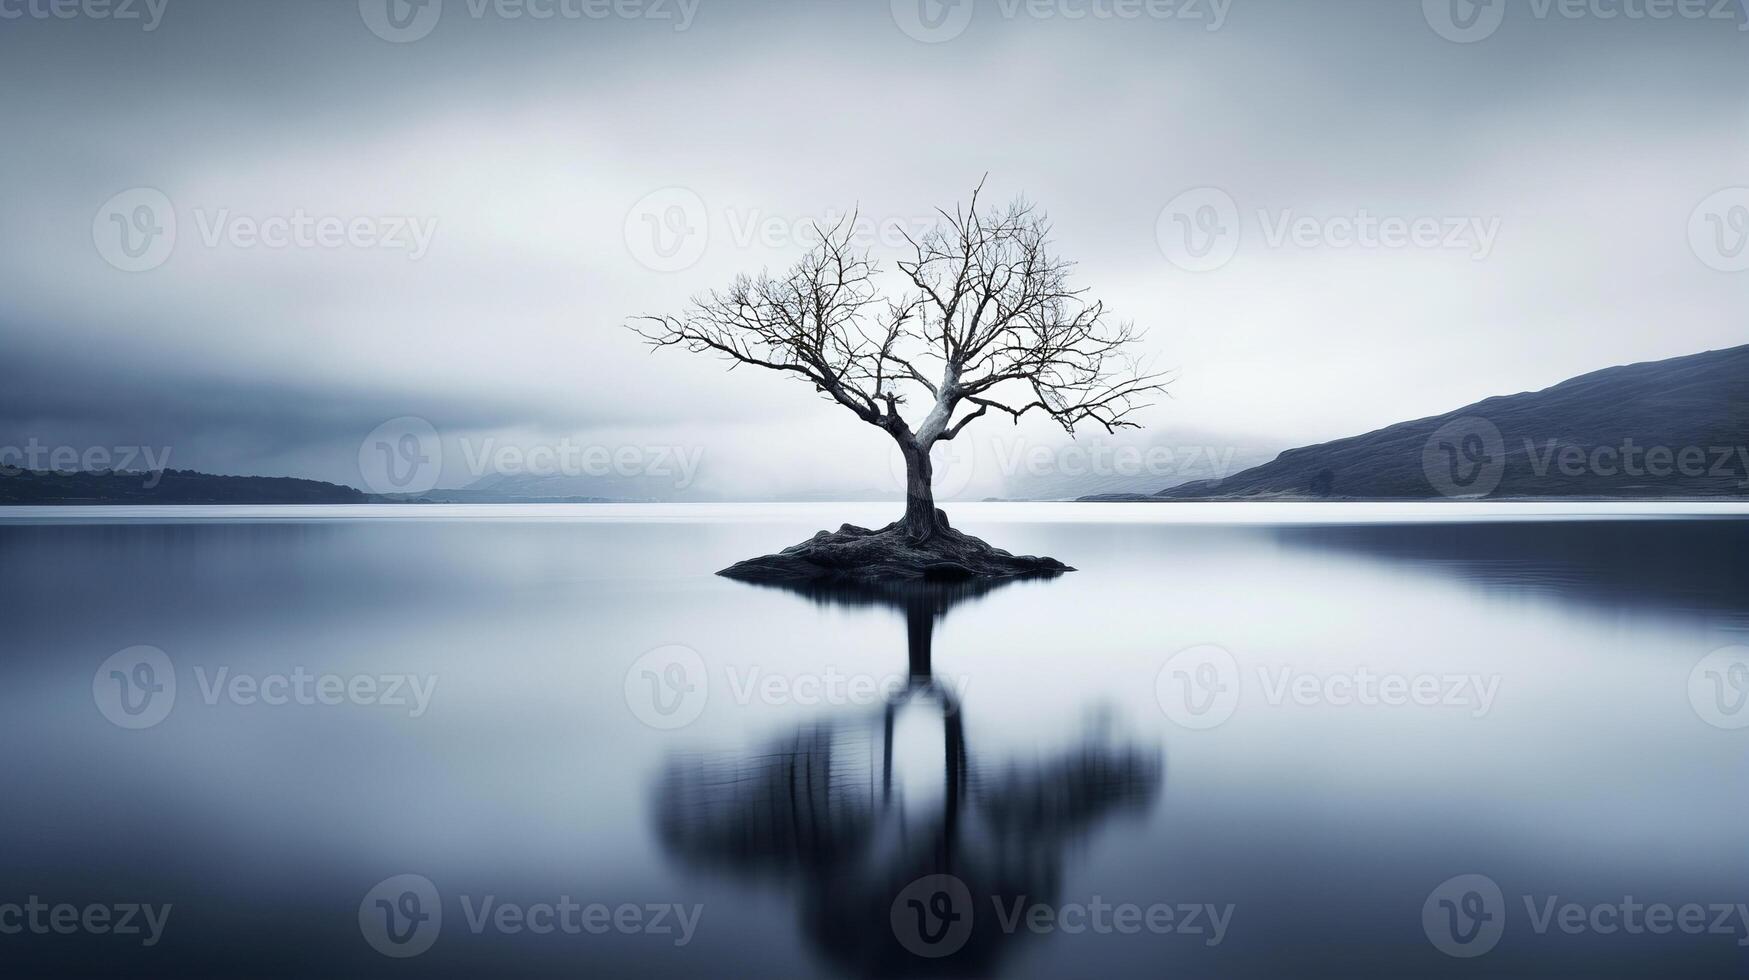 AI generated Lonely tree in midst of bleak lake creates melancholic atmosphere evoking sense of isolation photo